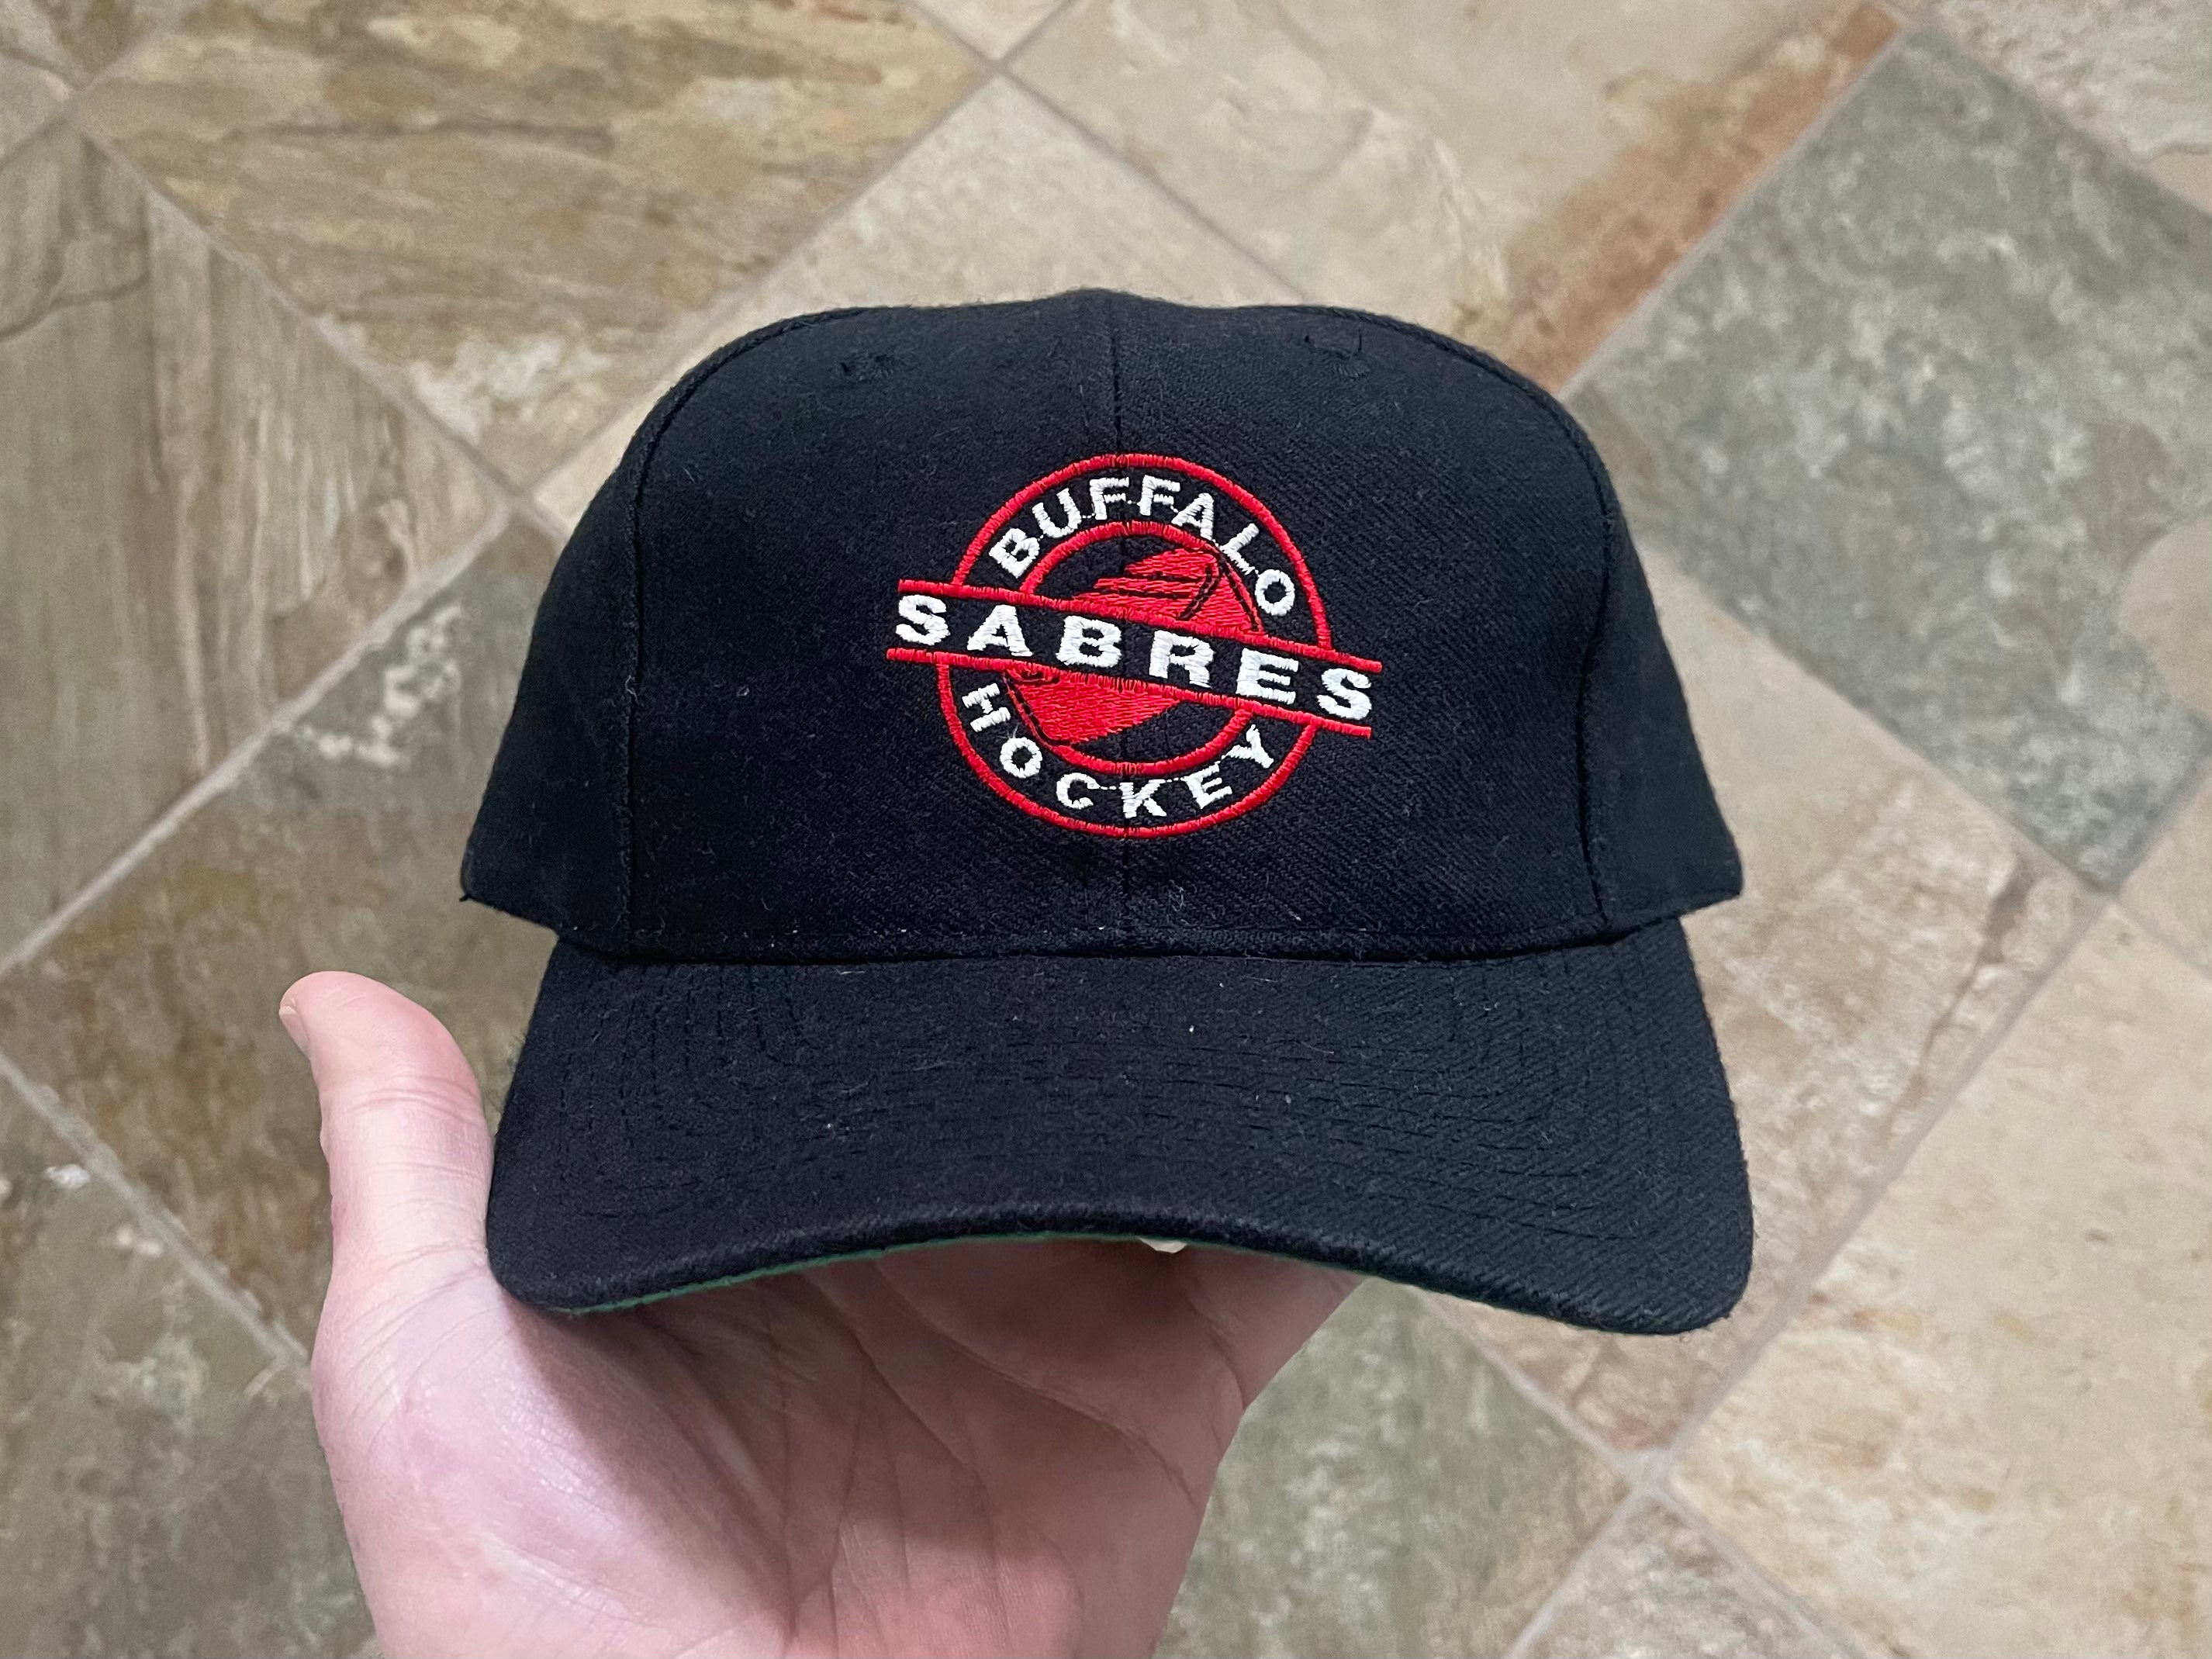 CCM, Accessories, Vintage 9s Ccm Buffalo Sabres Nhl Hockey Snapback Hat